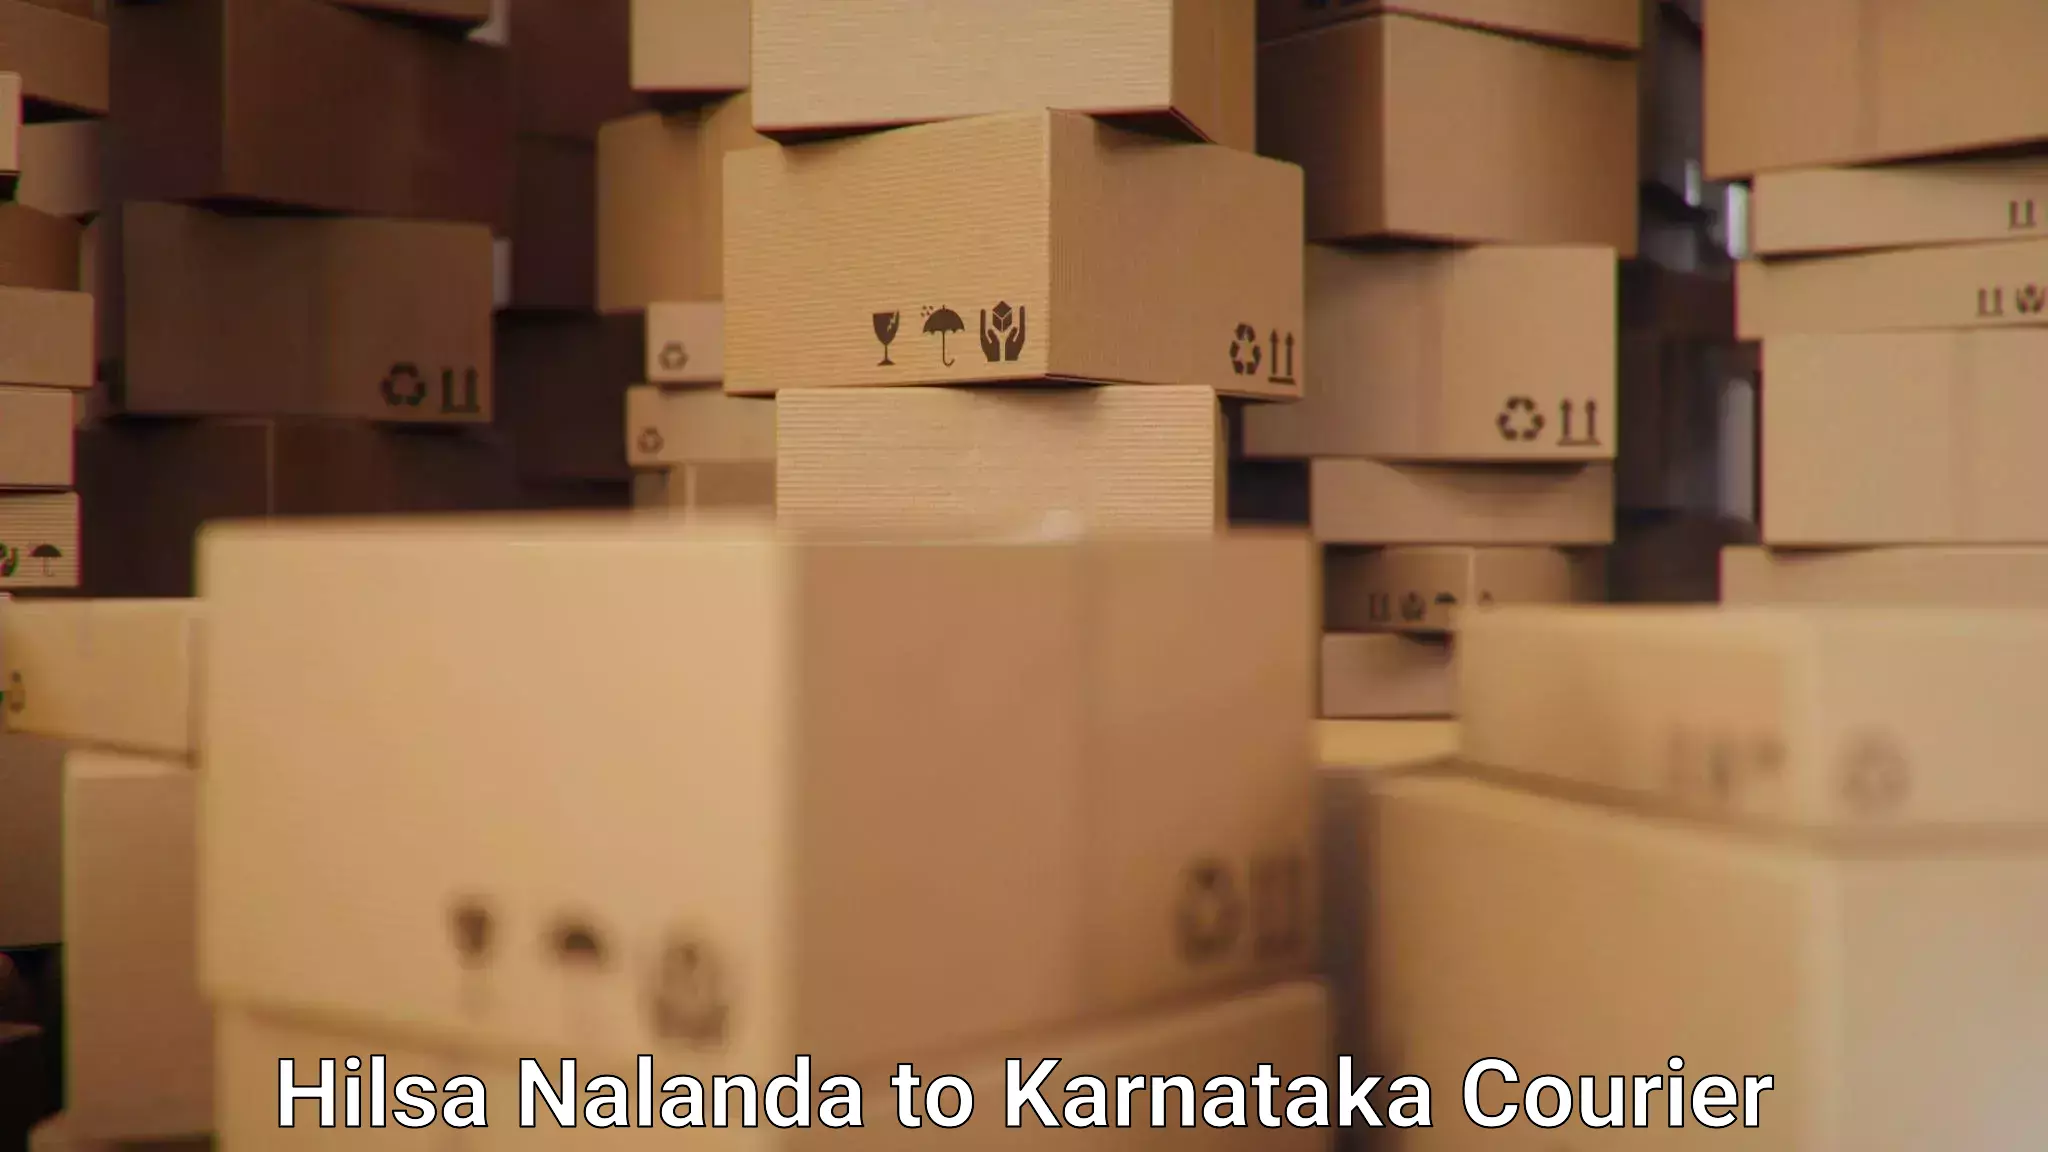 Regular parcel service Hilsa Nalanda to Karnataka